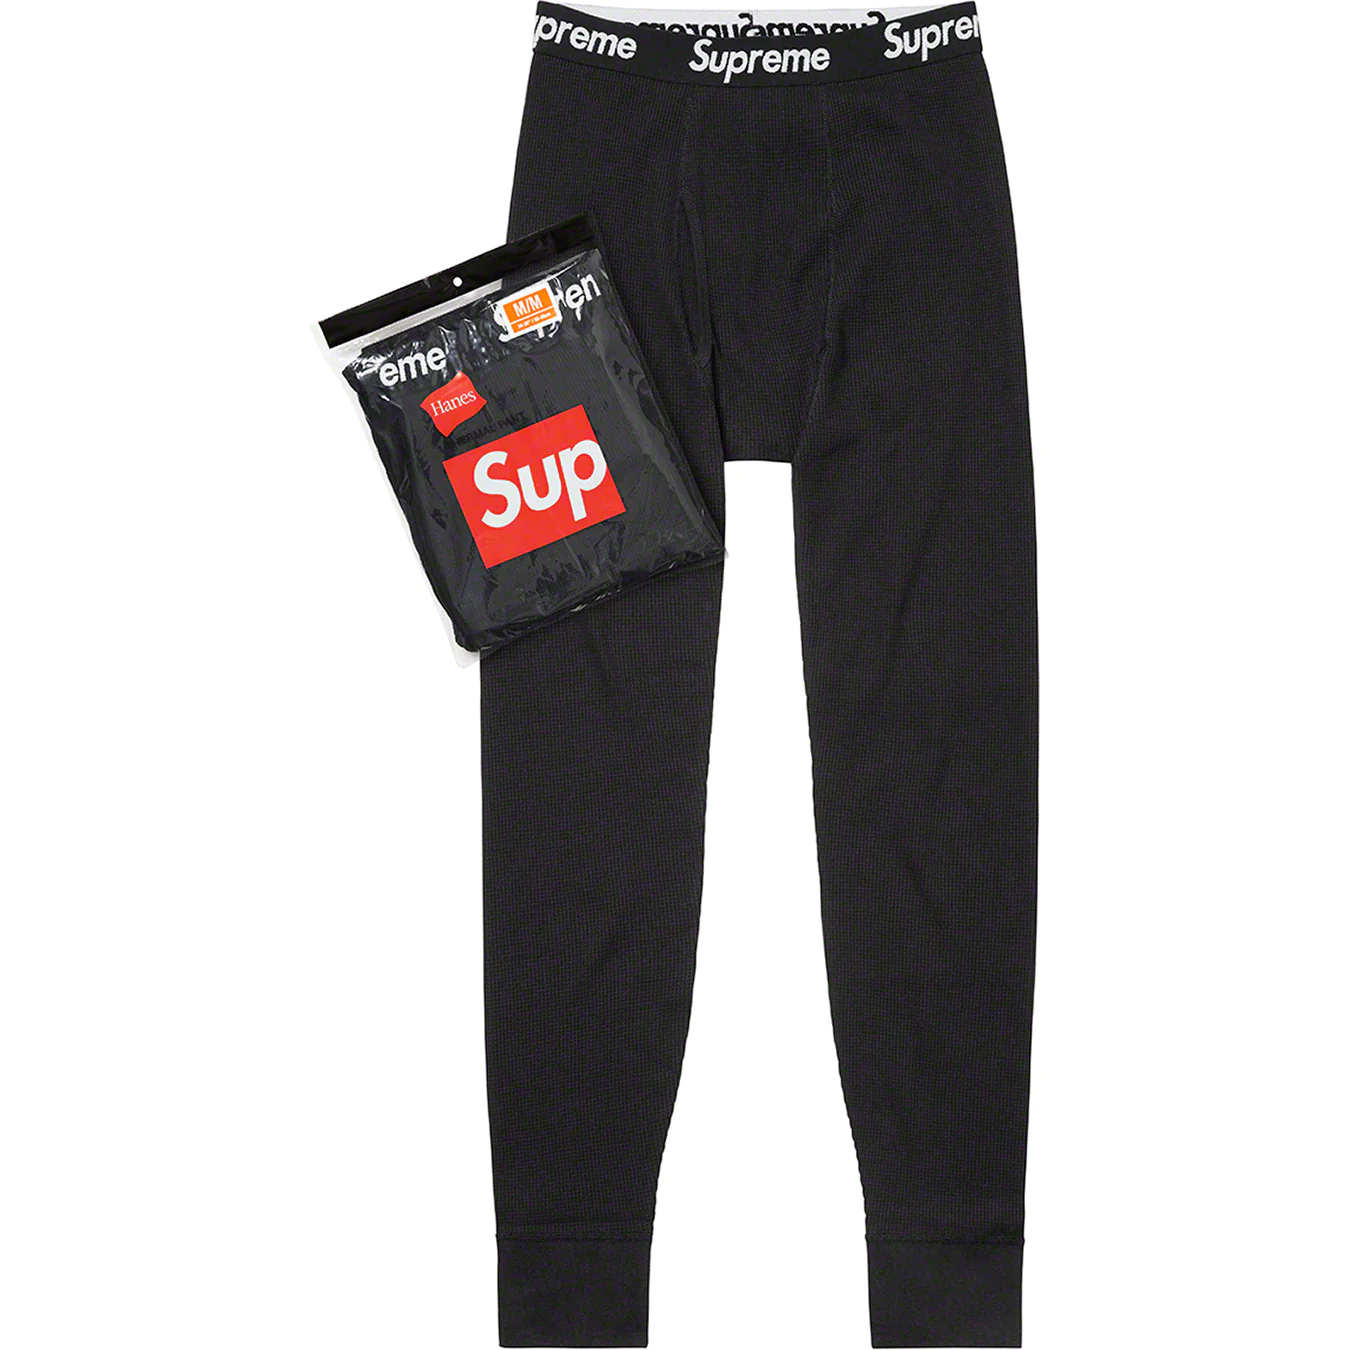 Supreme Supreme®/Hanes® Thermal Pant (1 Pack)